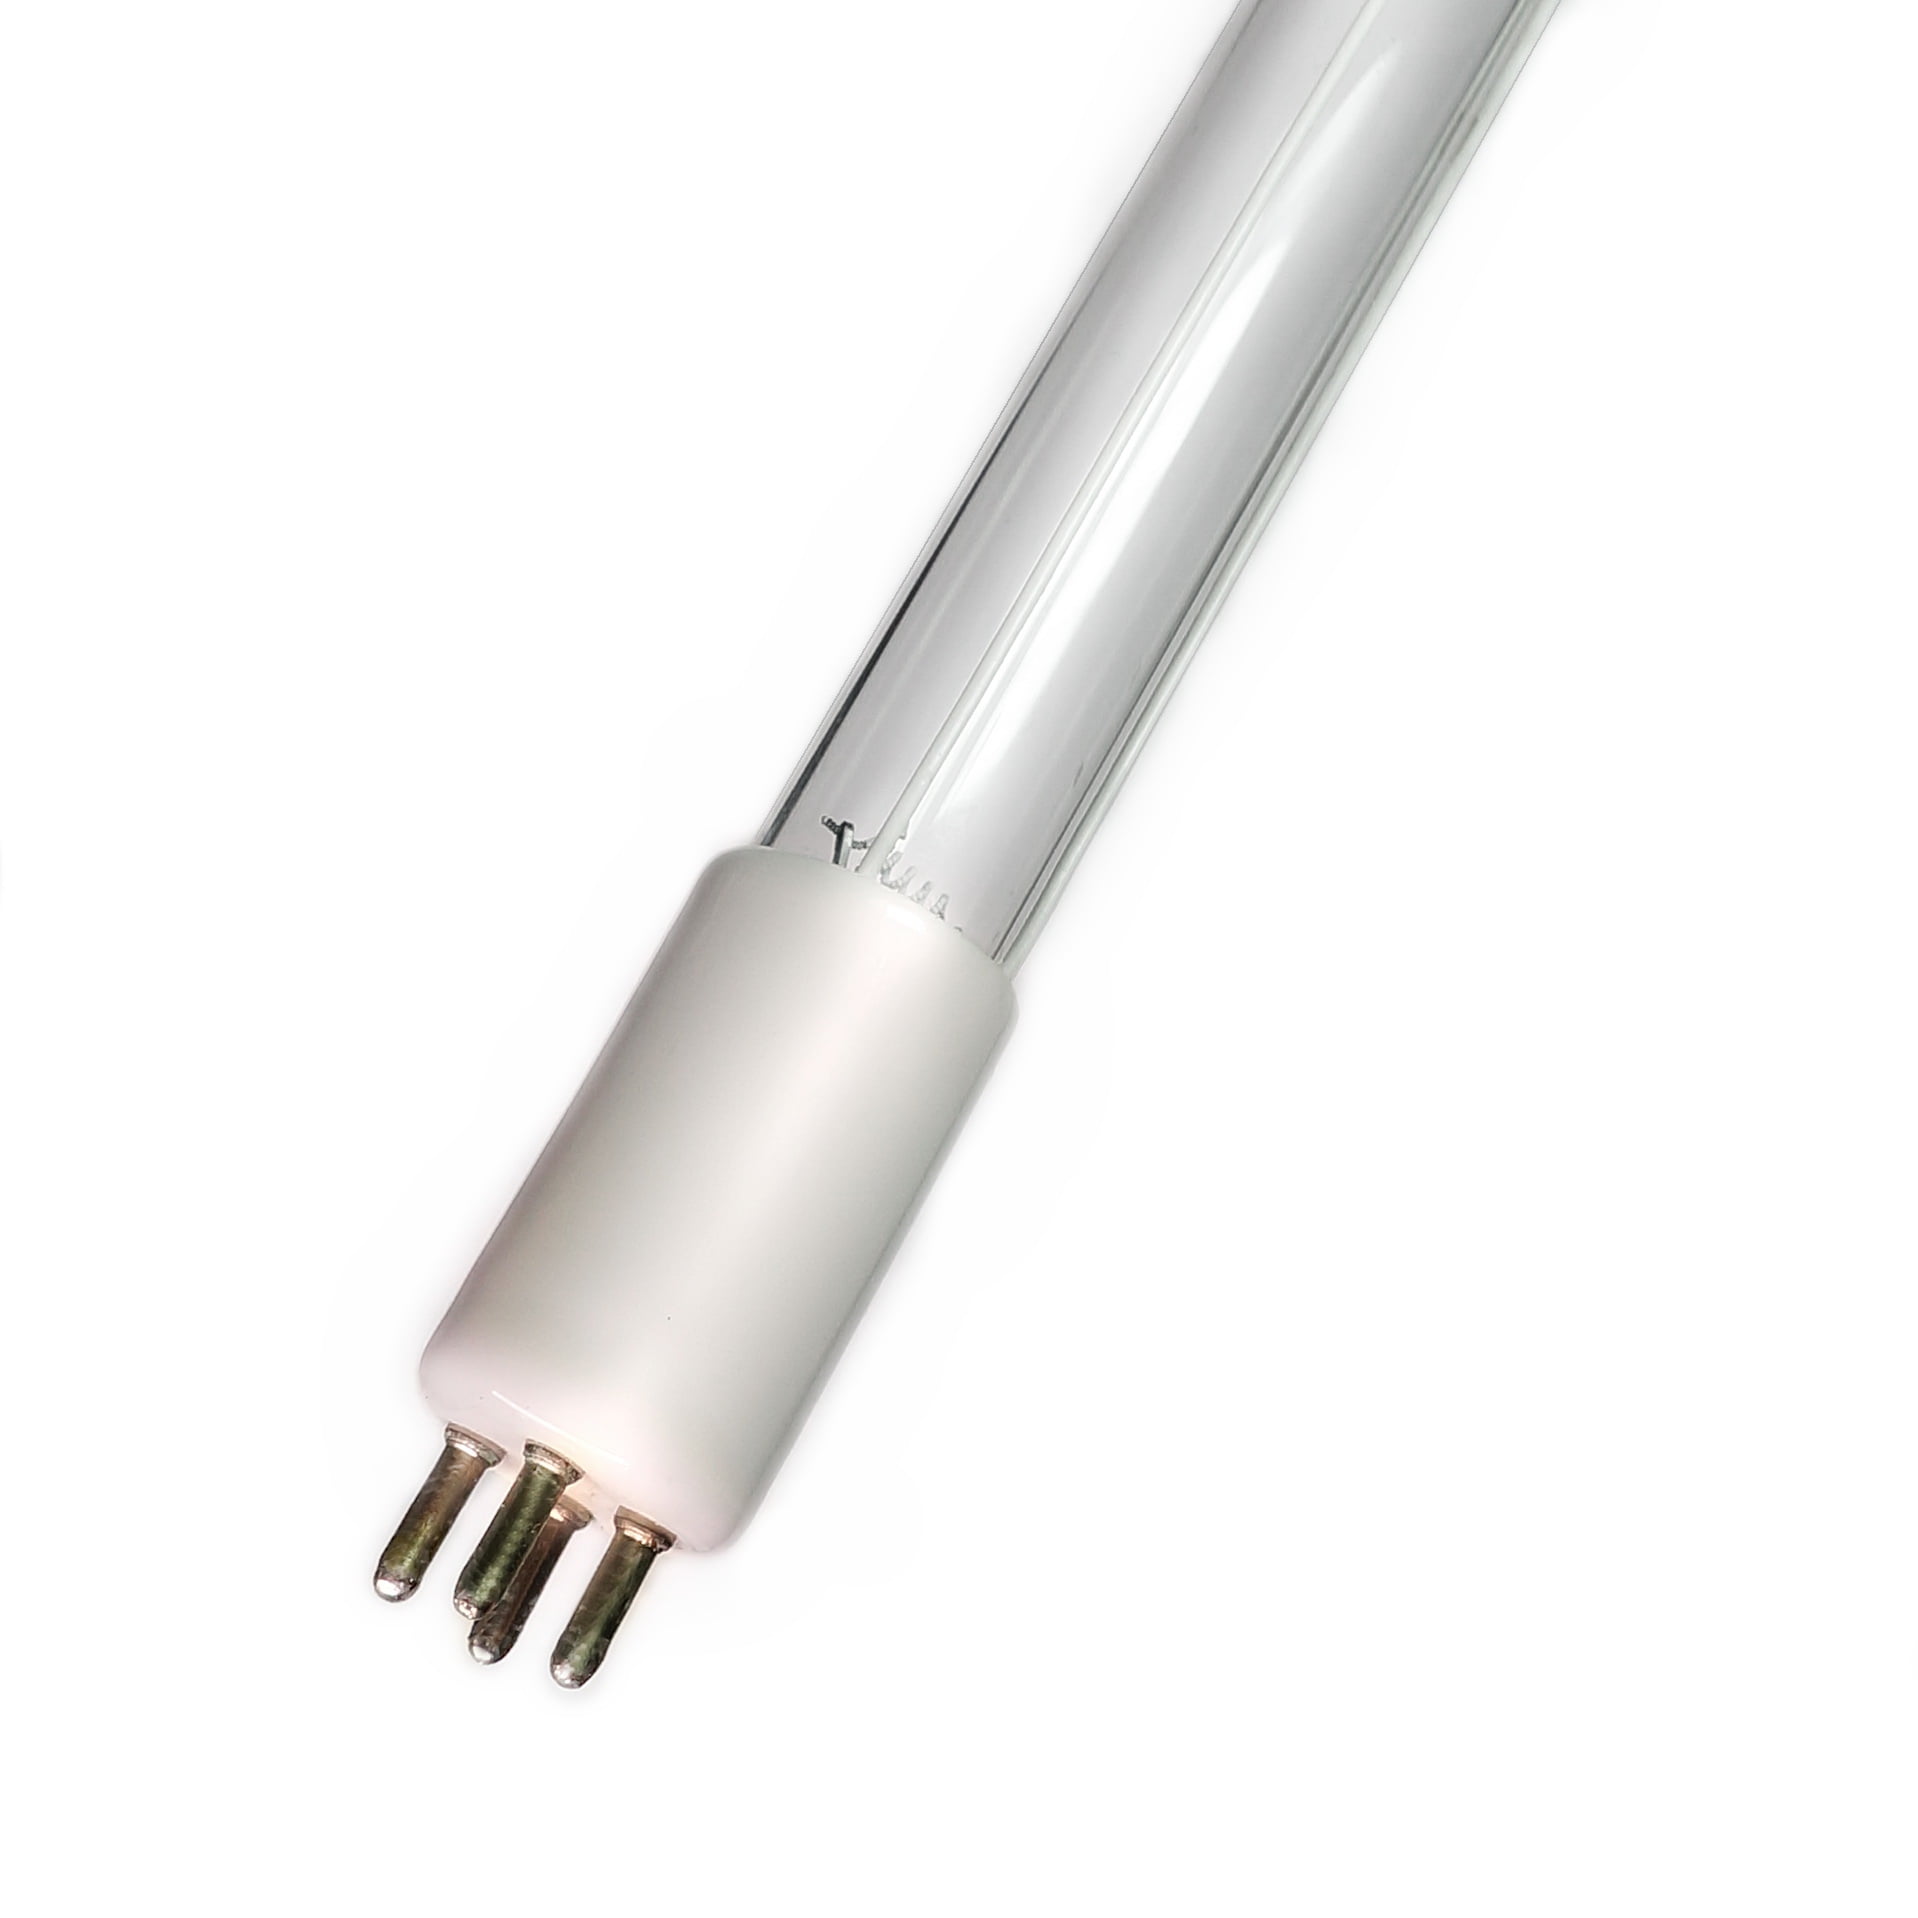 Lse Lighting Compatible Uv Light Bulb Uvc-D842T5 39W For Suv-895 Sterilizer